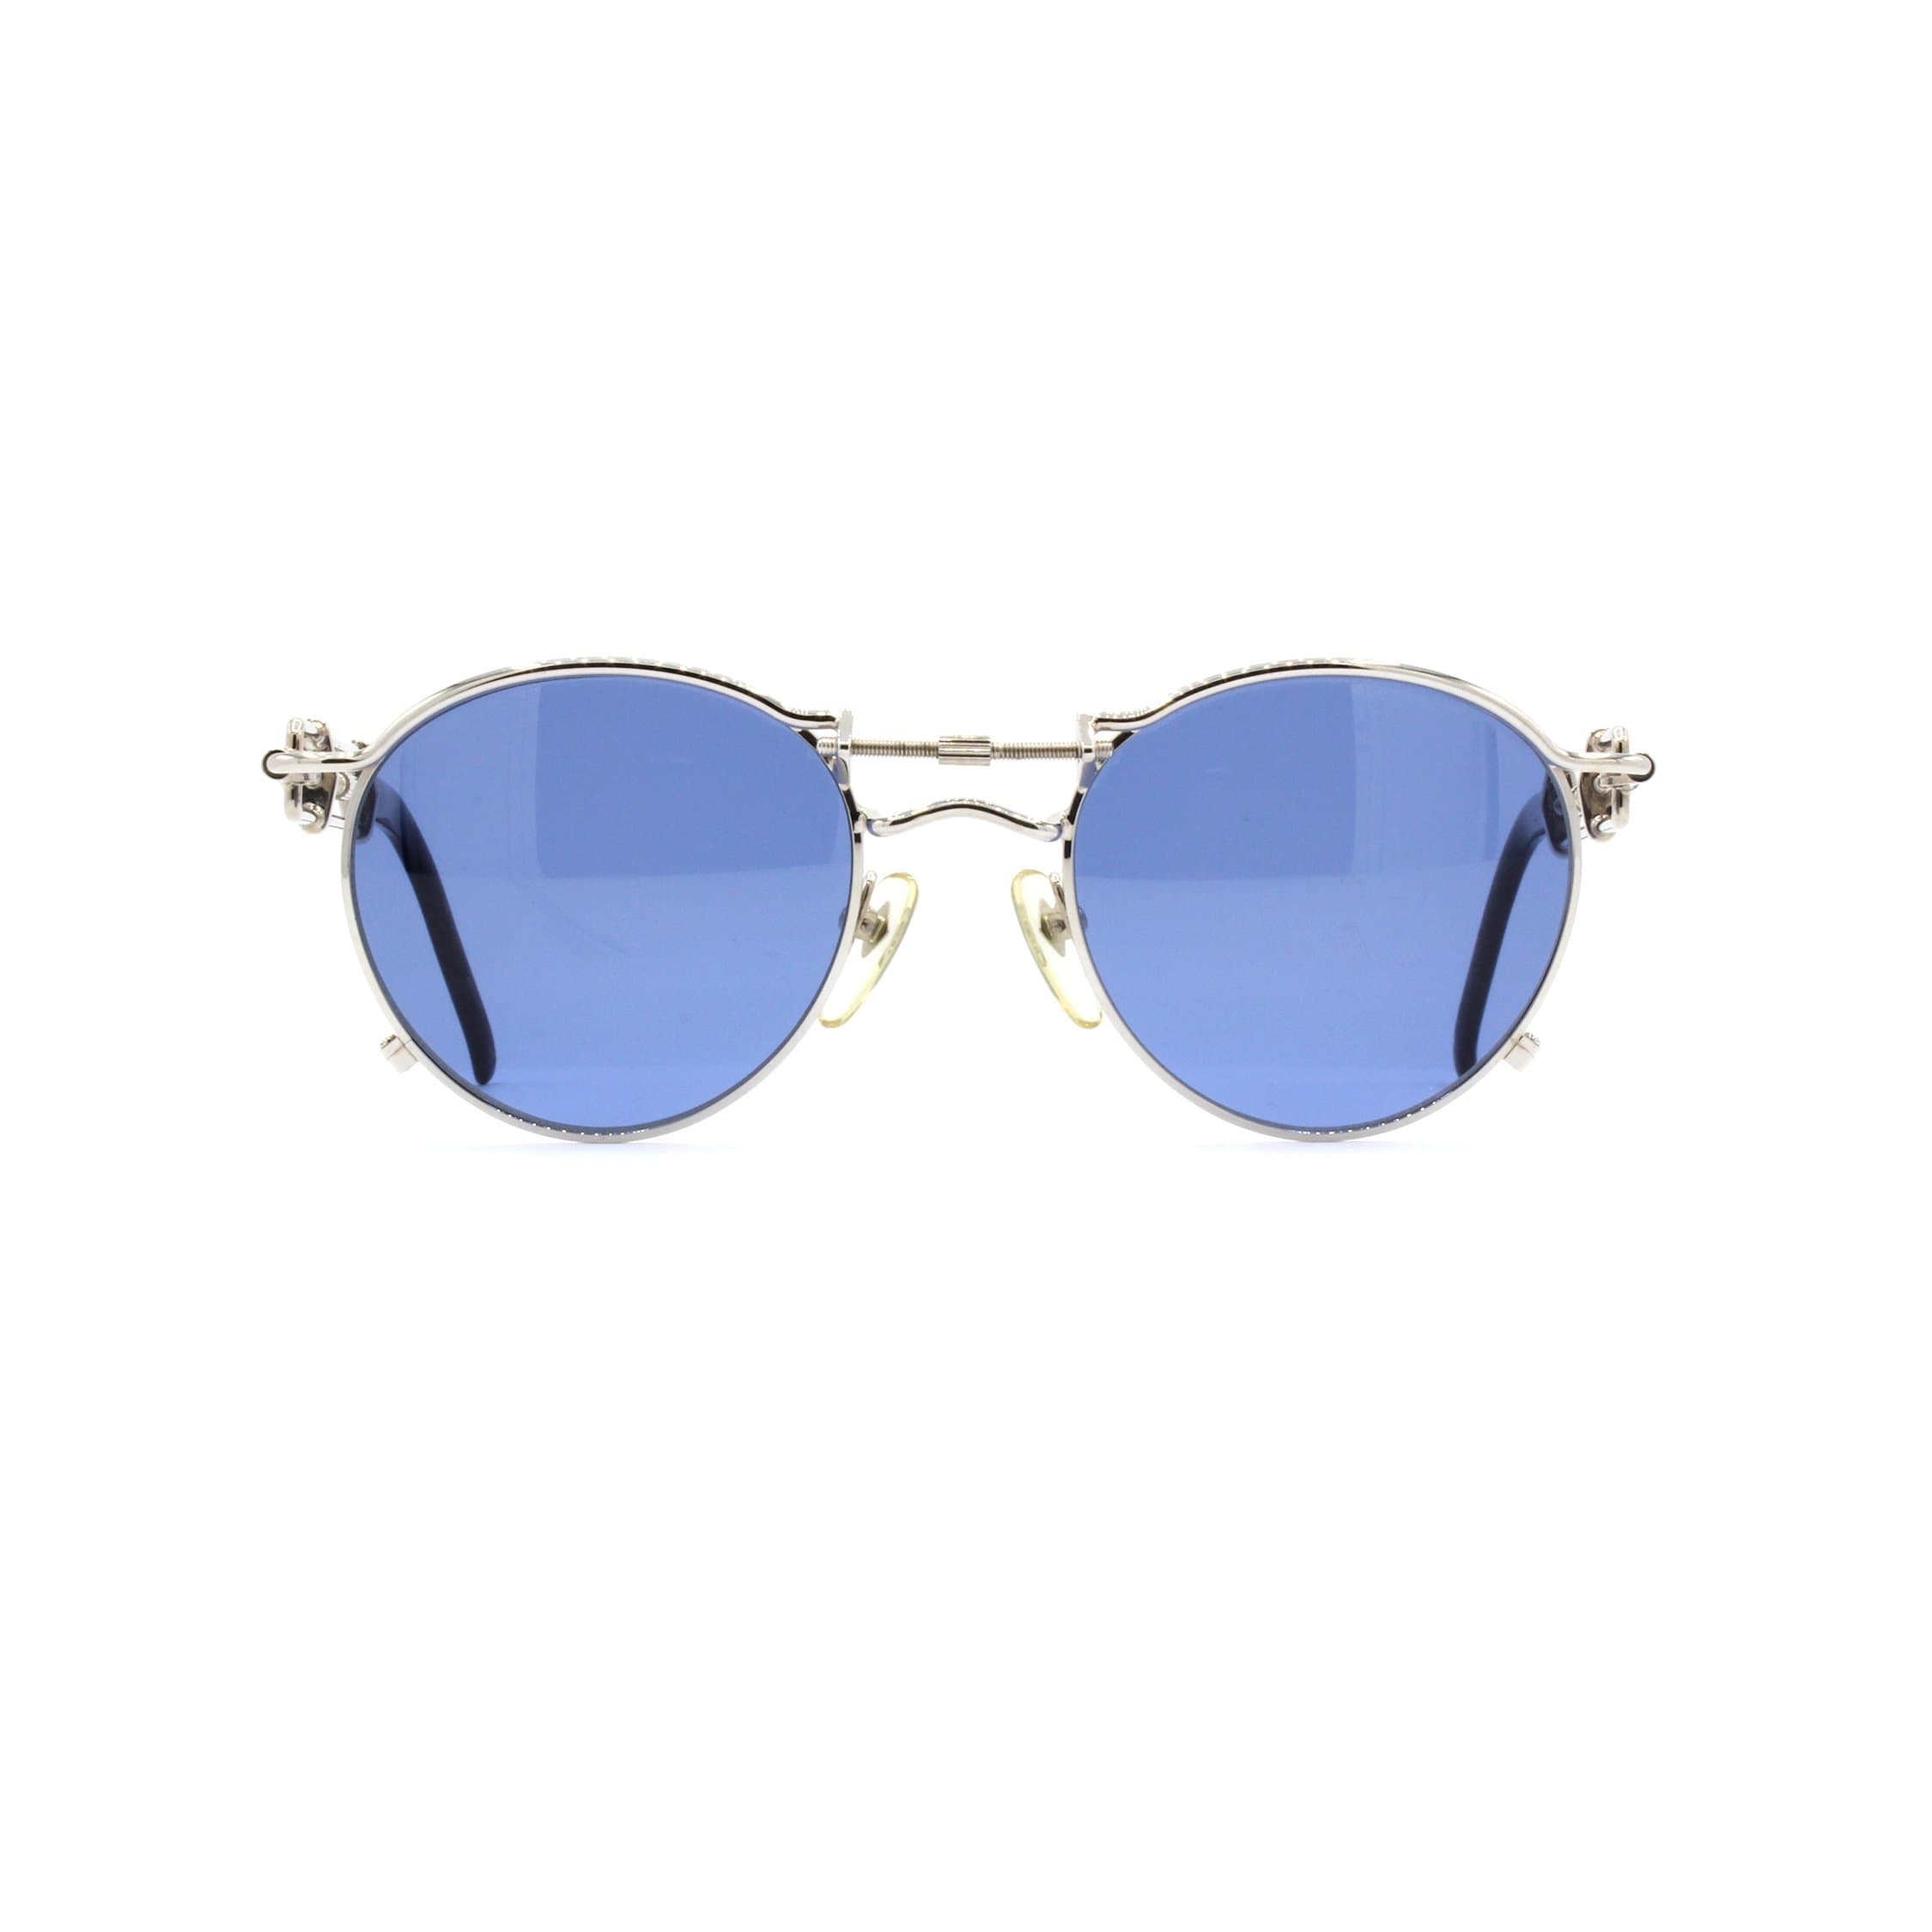 Silver Vintage Jean Paul Gaultier 56-0174 Sunglasses